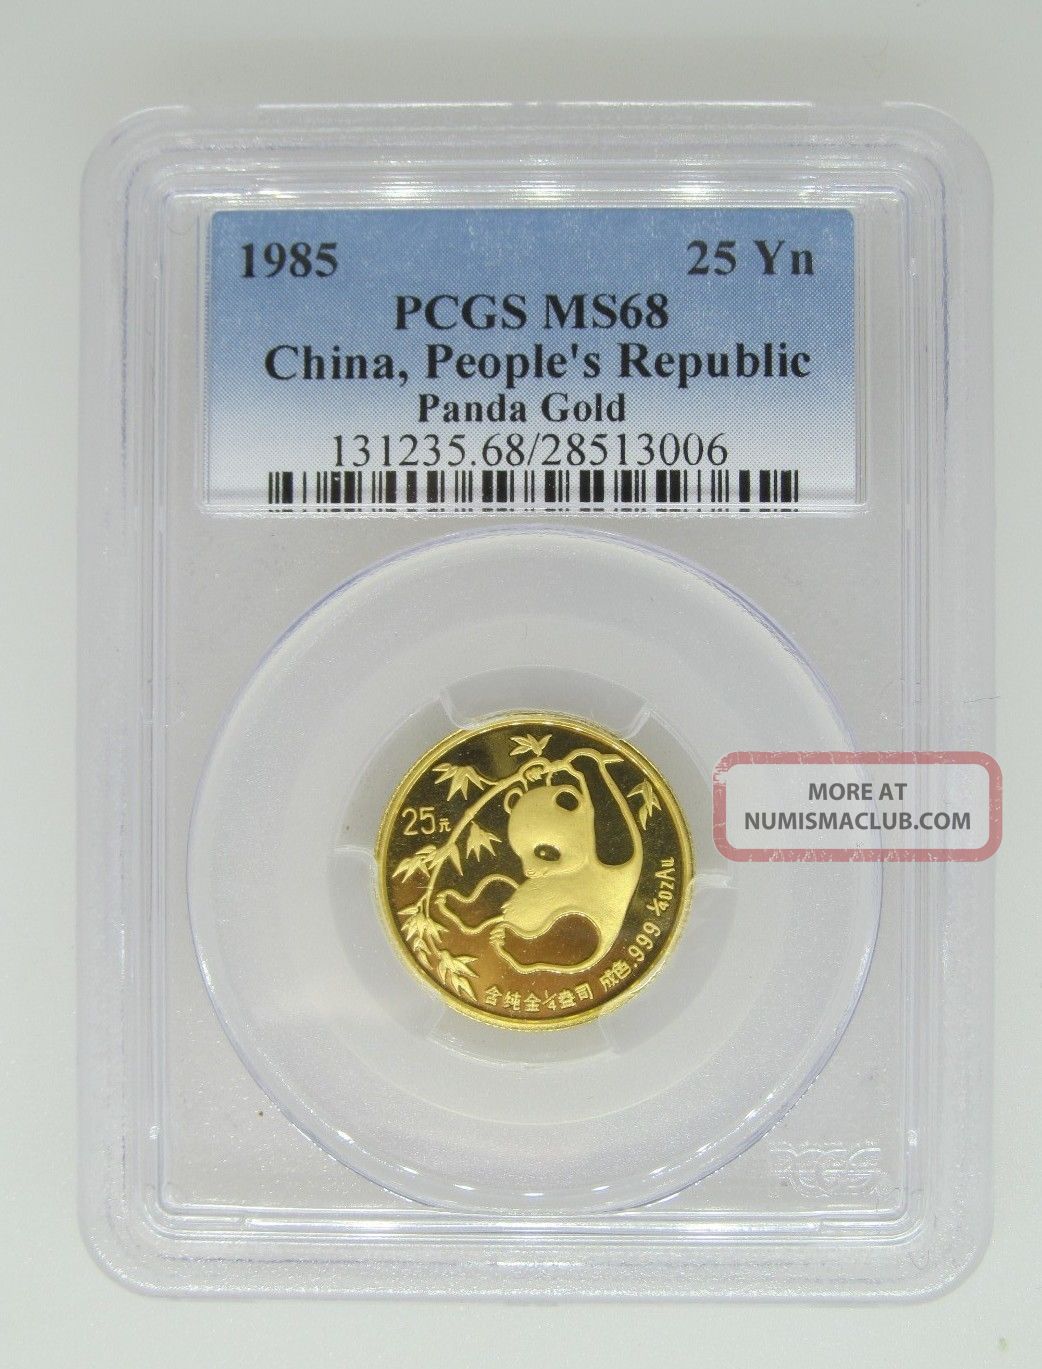 1985 Pcgs Ms68 China People ' S Republic.  999 Gold Panda - 25 Yn Quarter Ounce 1/4 China photo